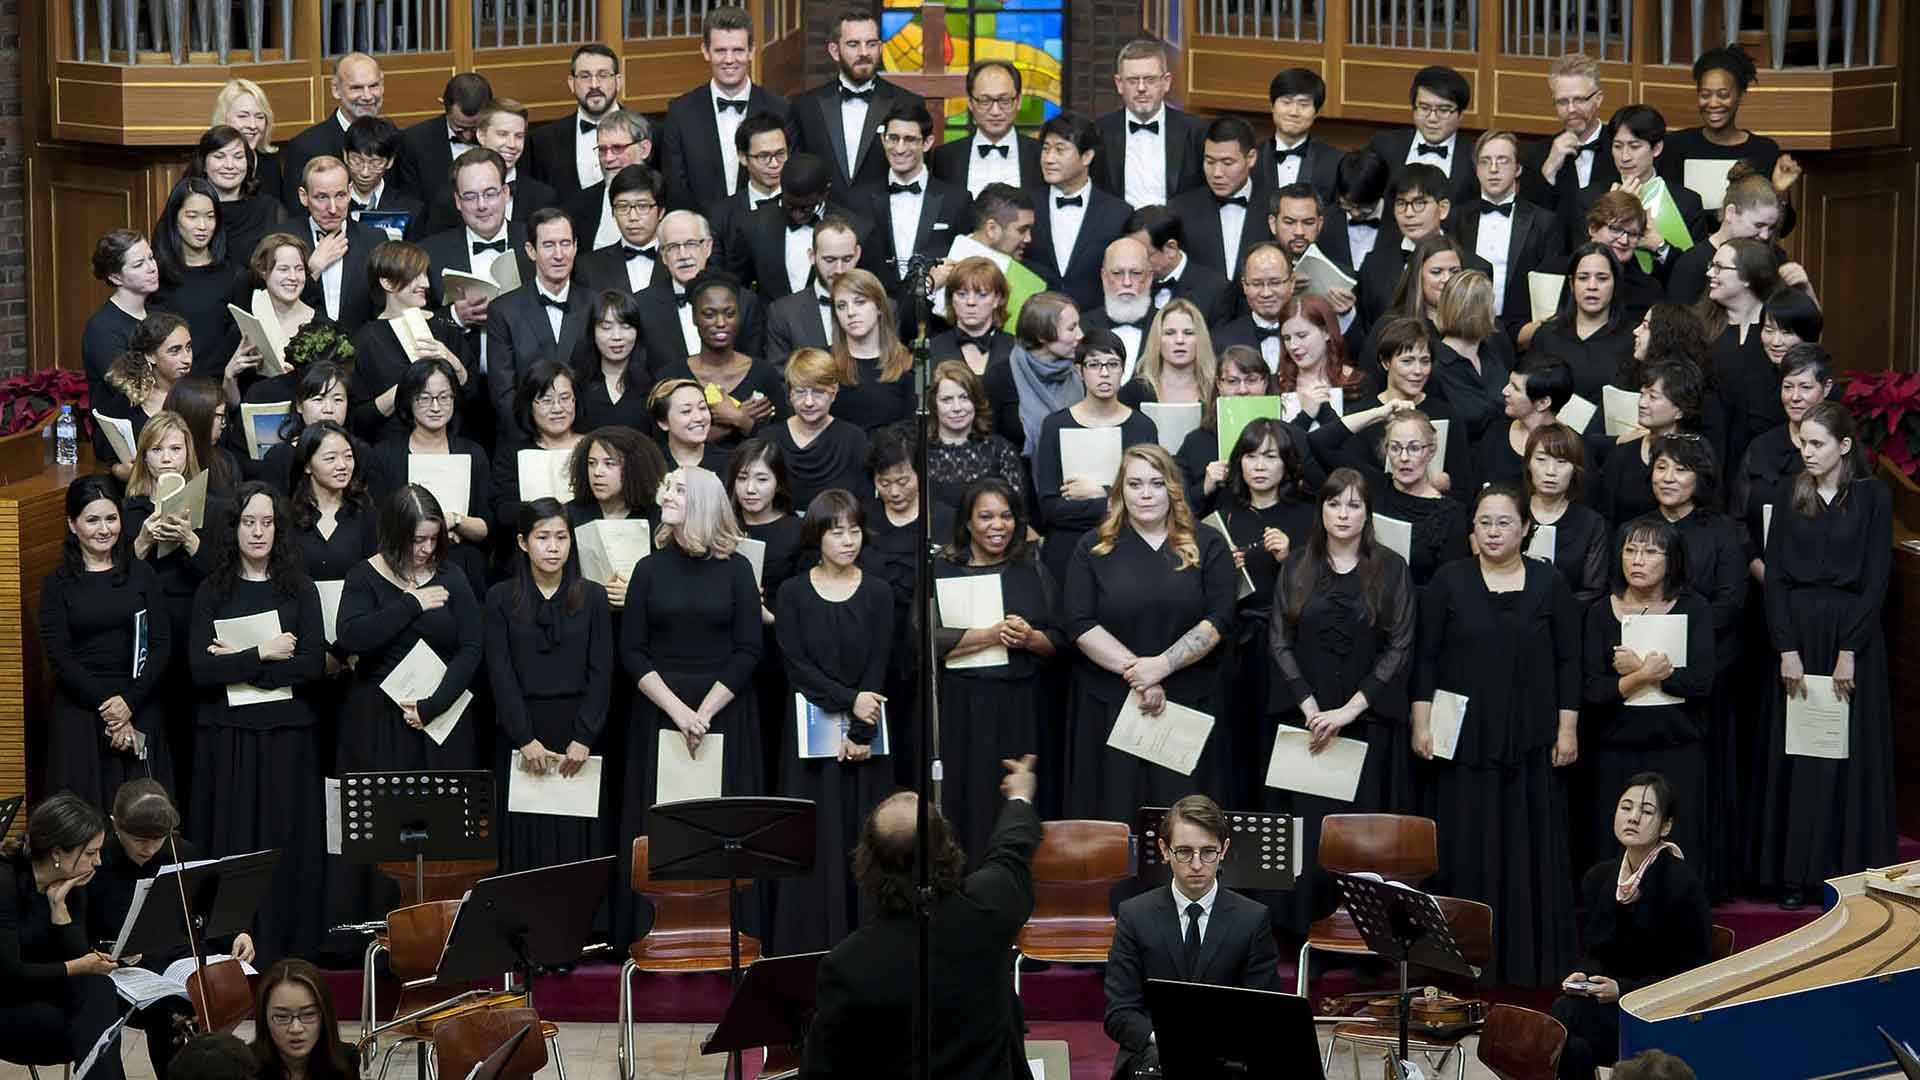 World Choir Games in 2020 in Vlaanderen